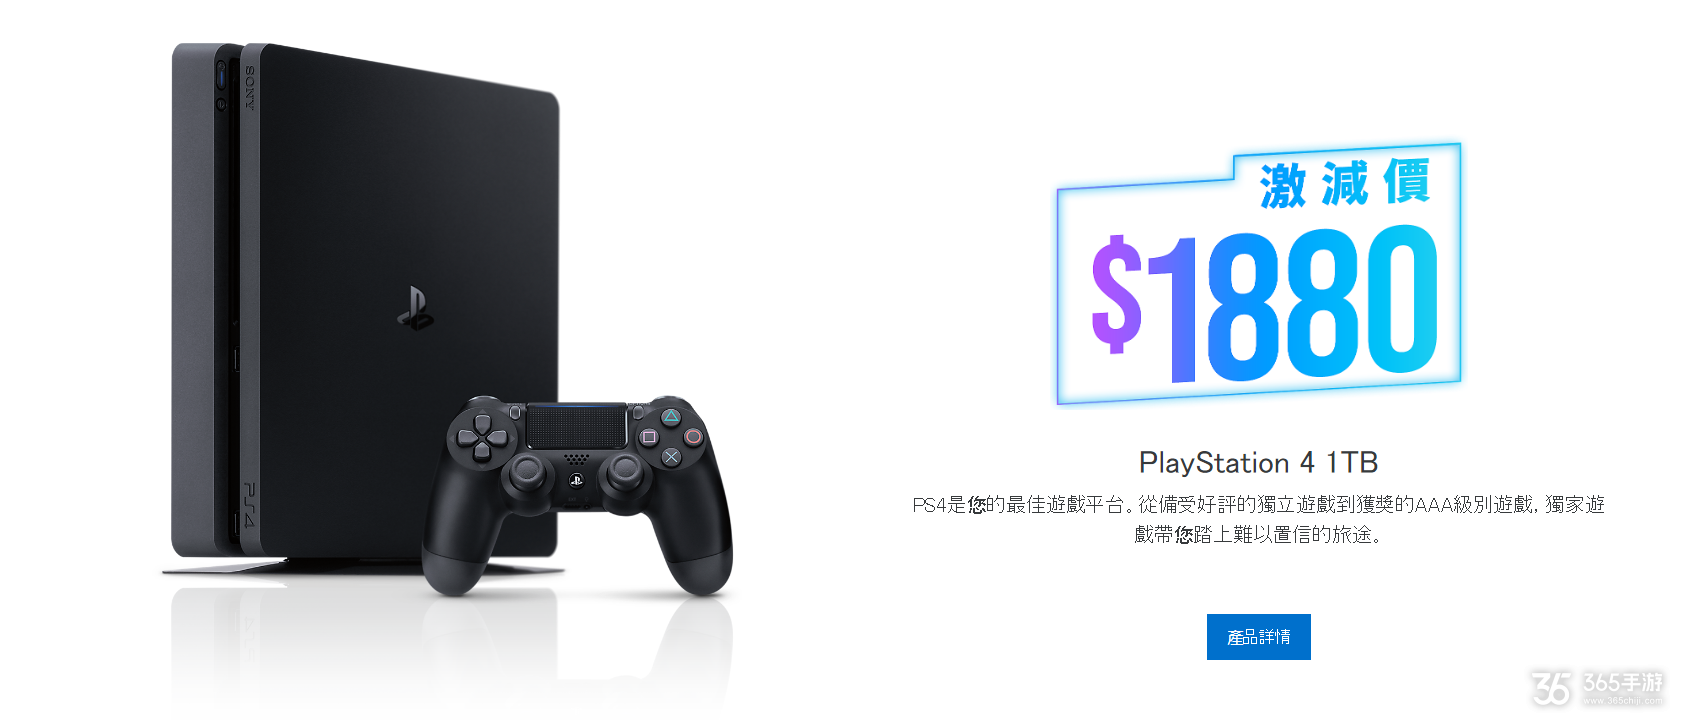 PS港服黑五特惠22日开启 PS4 Pro仅需2320元